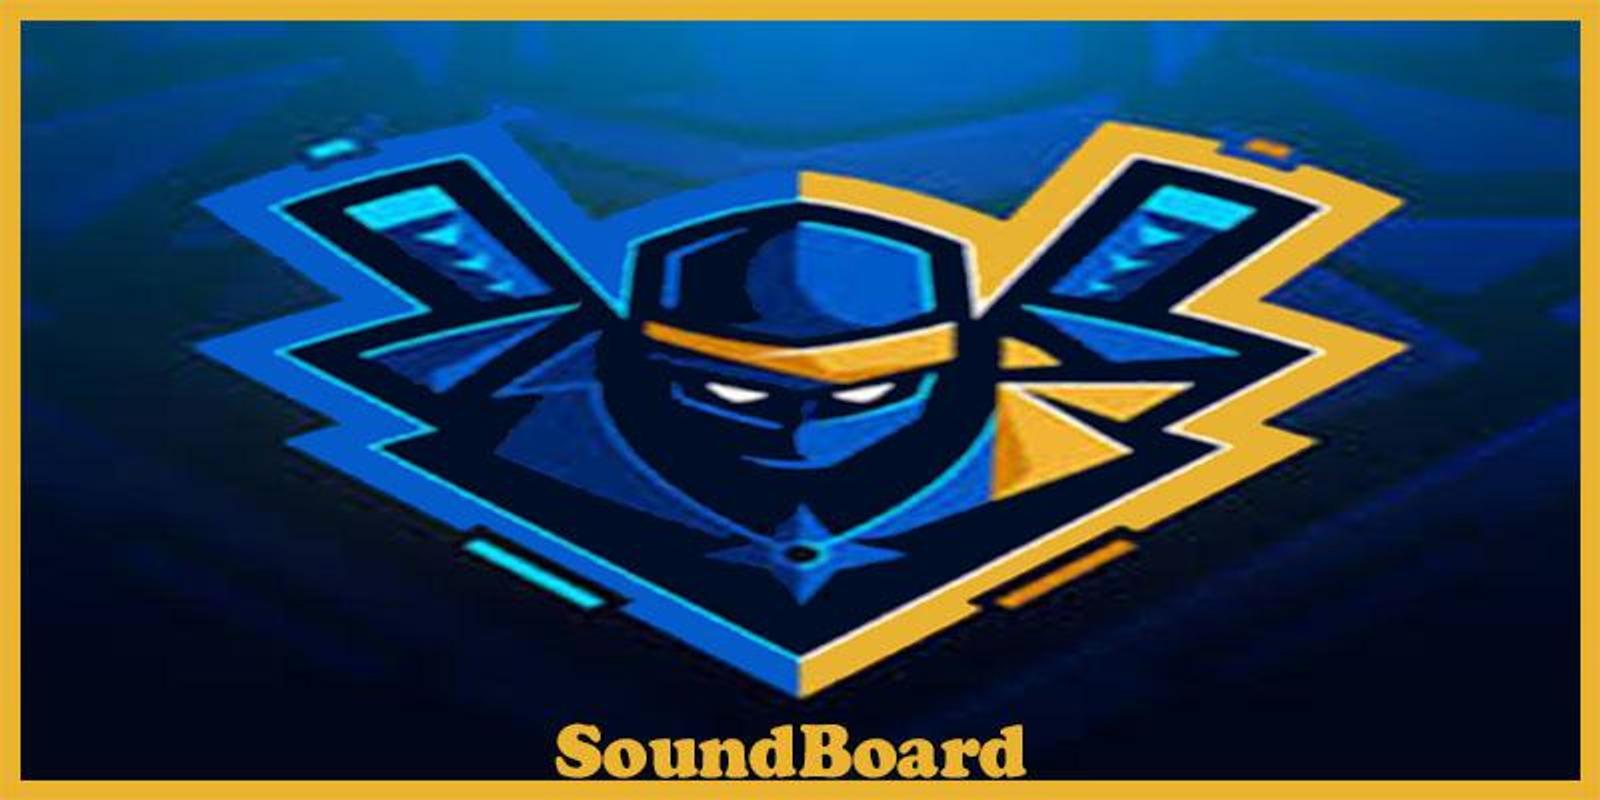 Ninja Fortnite Logo - Ninja Fortnite SoundBoard Buttons for Android - APK Download